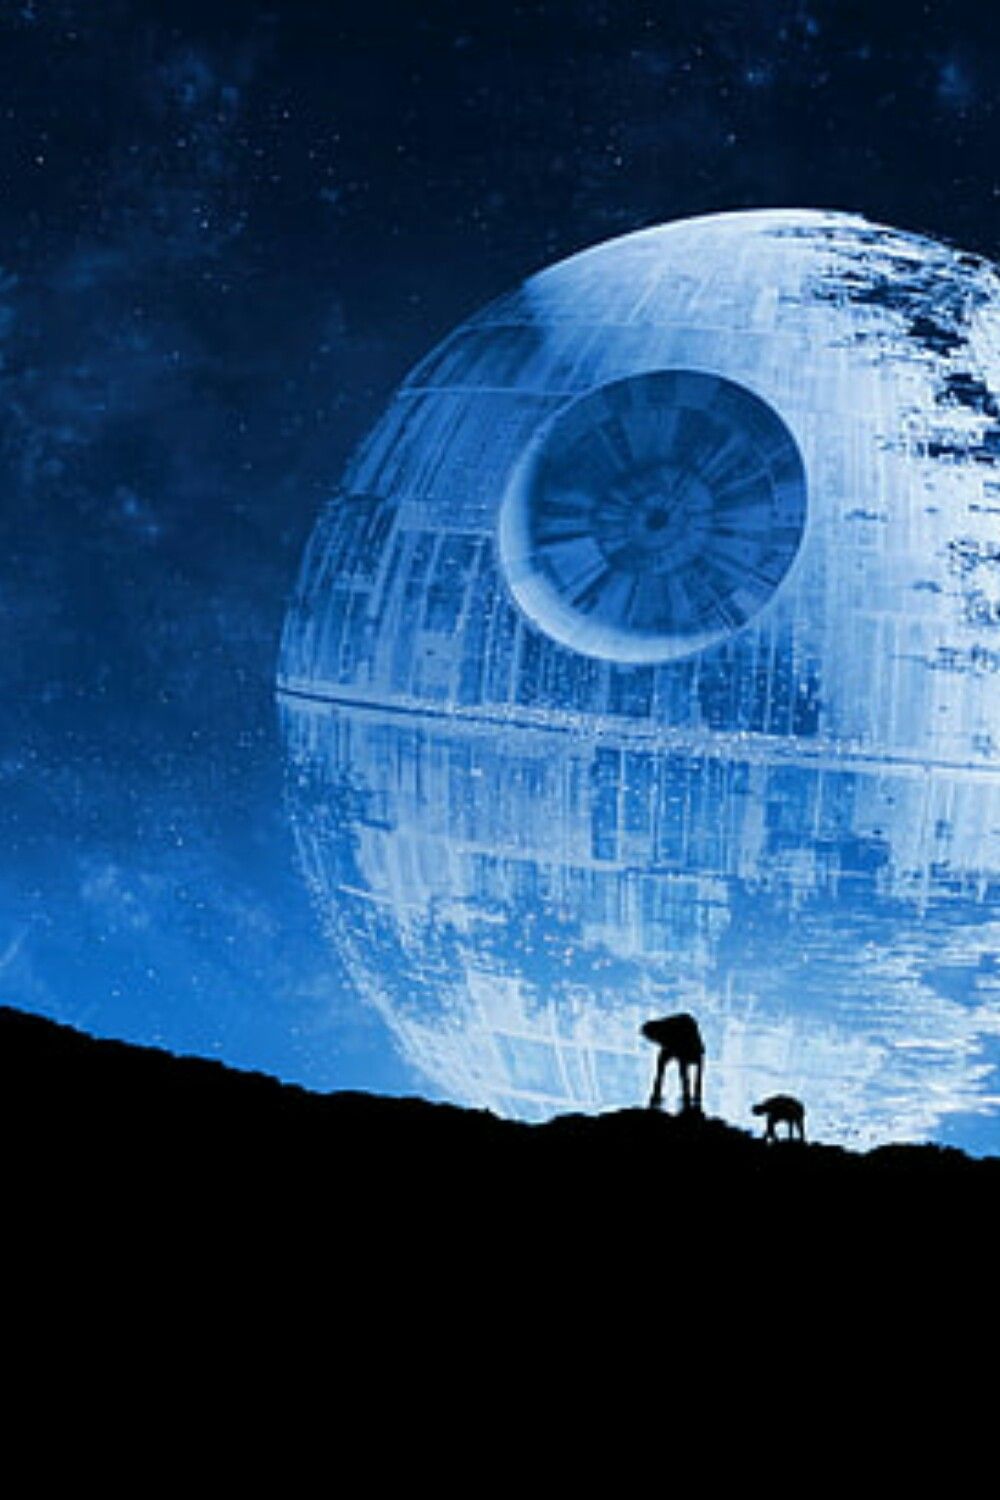  Star Wars Hintergrundbild 1000x1500. Star Wars wallpaper iphone aesthetic. Star wars picture, Star wars wallpaper, Star wars background